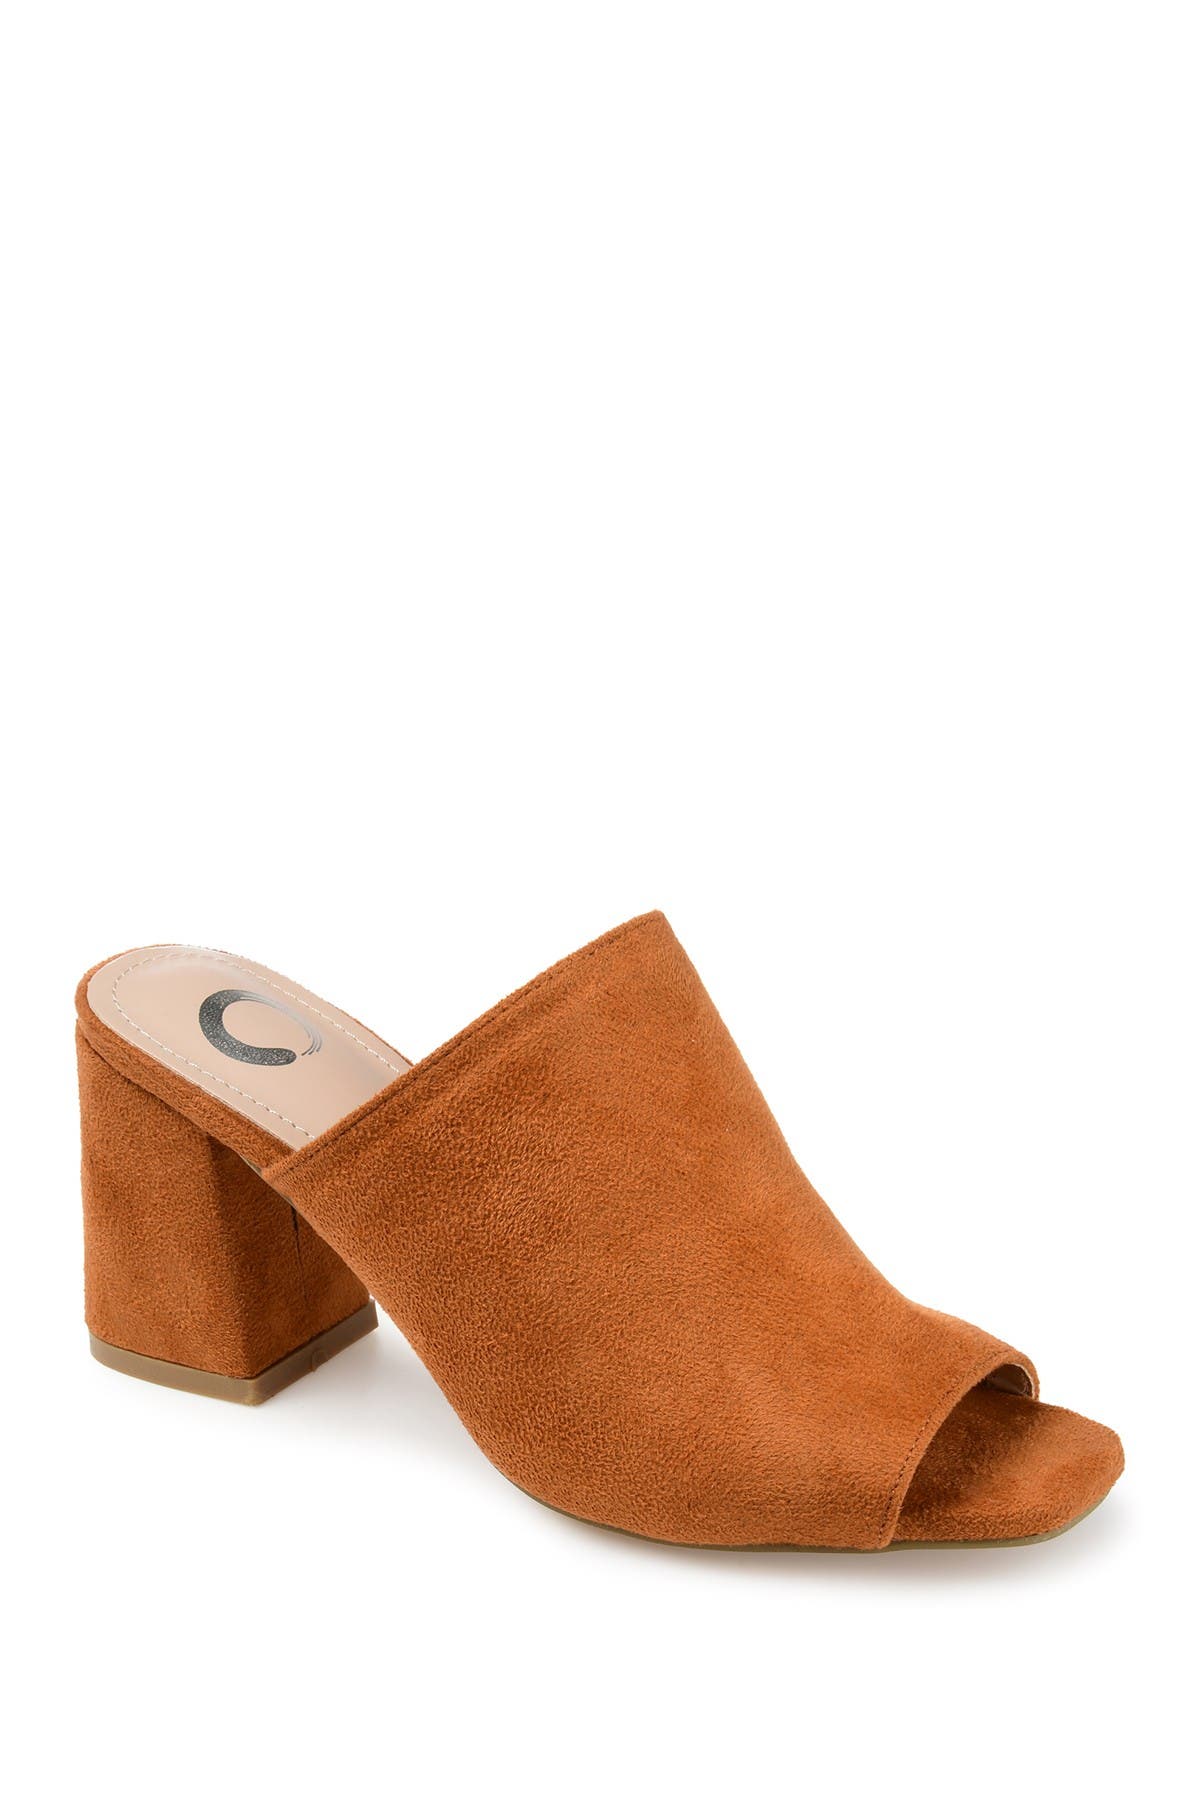 Journee Collection Adelaide Slide Mule Sandal In Rust/copper